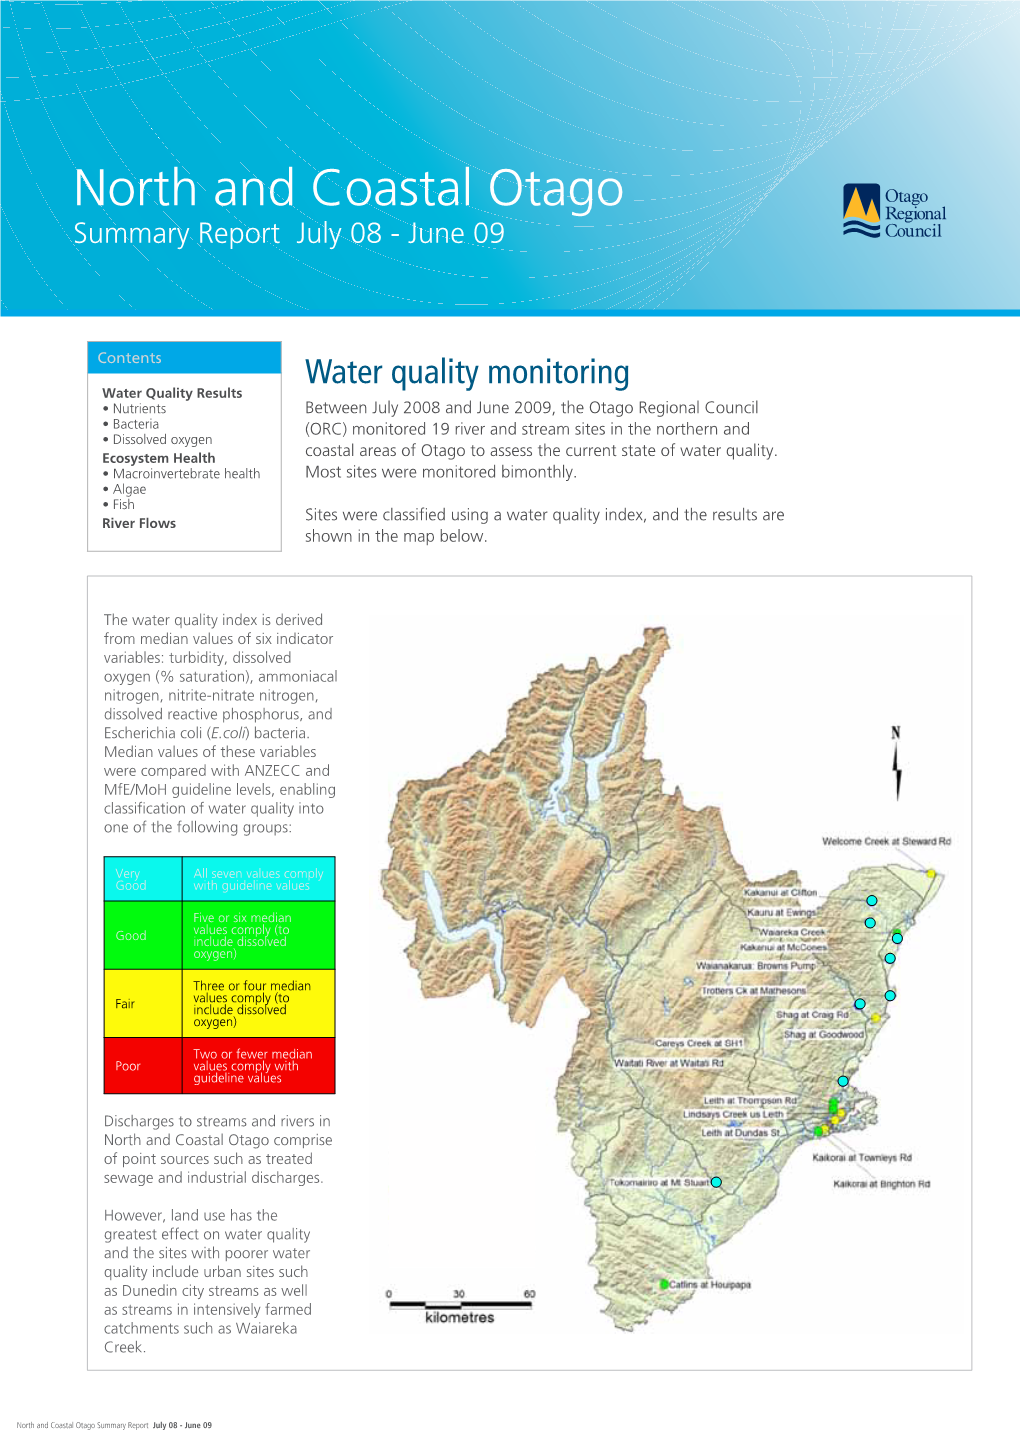 North and Coastal Otago Summary Report July 08 - June 09